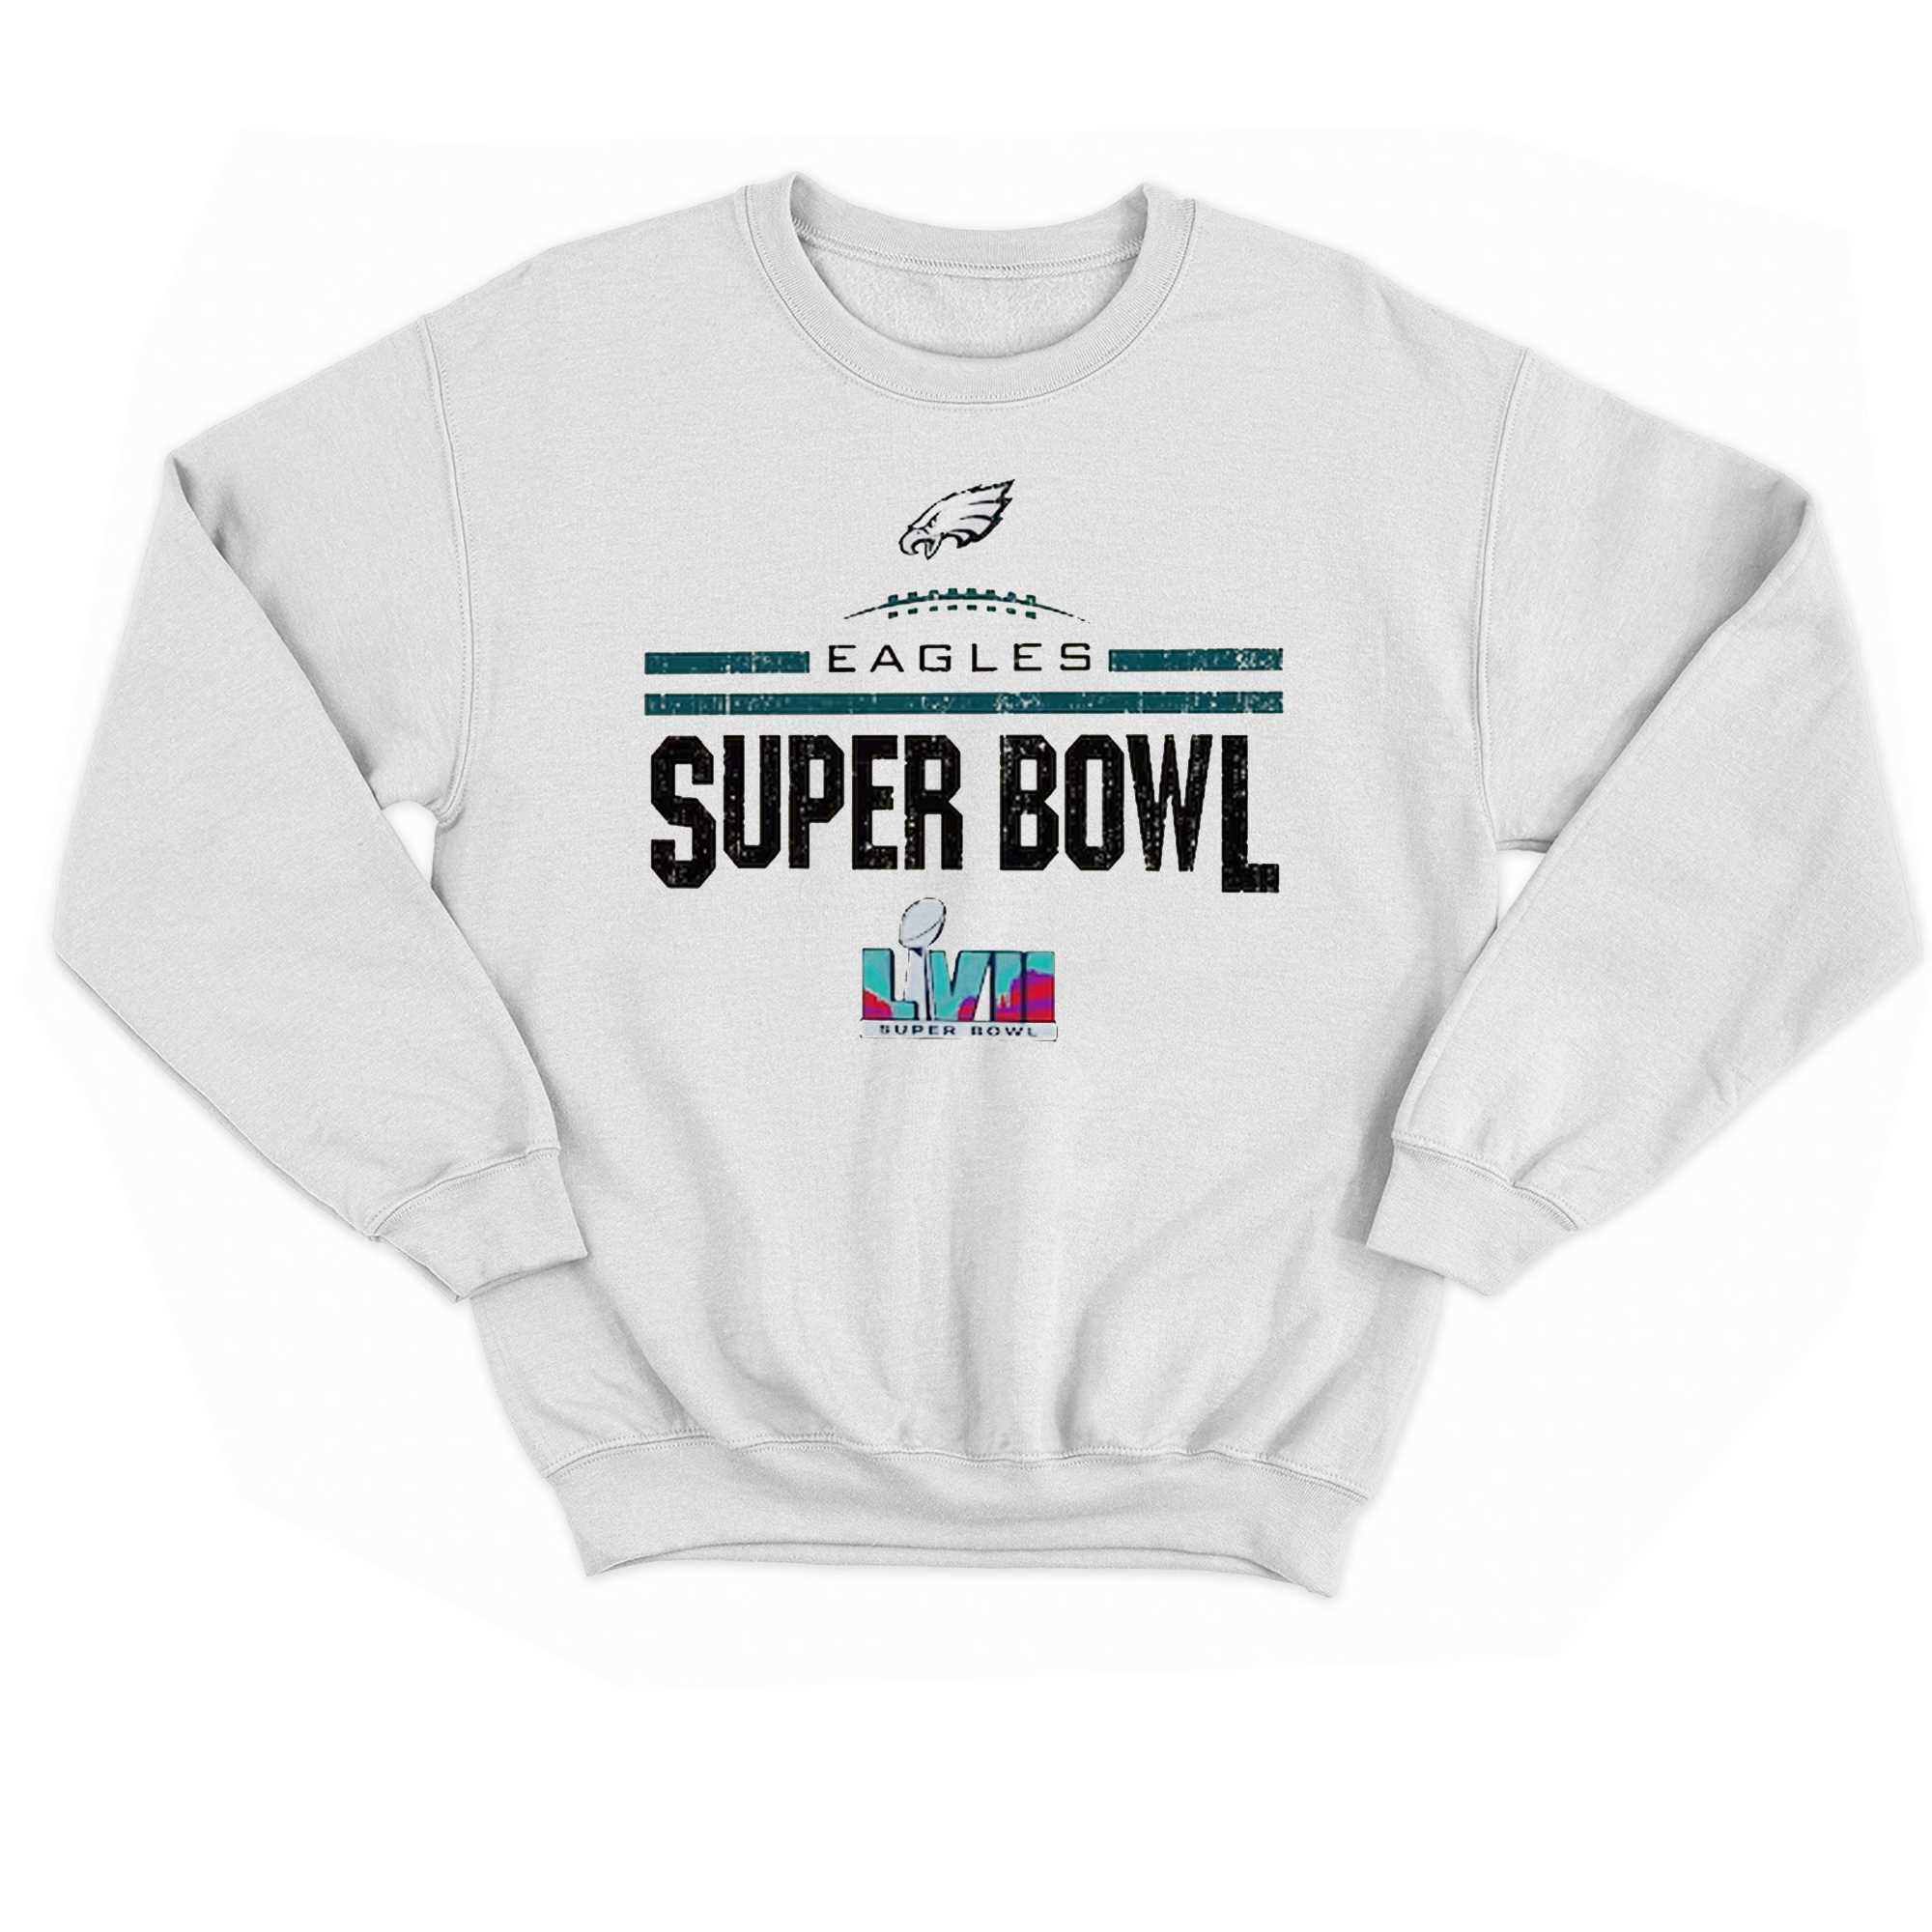 Official Philadelphia Eagles Majestic Threads Super Bowl Lvii Goal Line Stand Sweatshirt Hoodie 